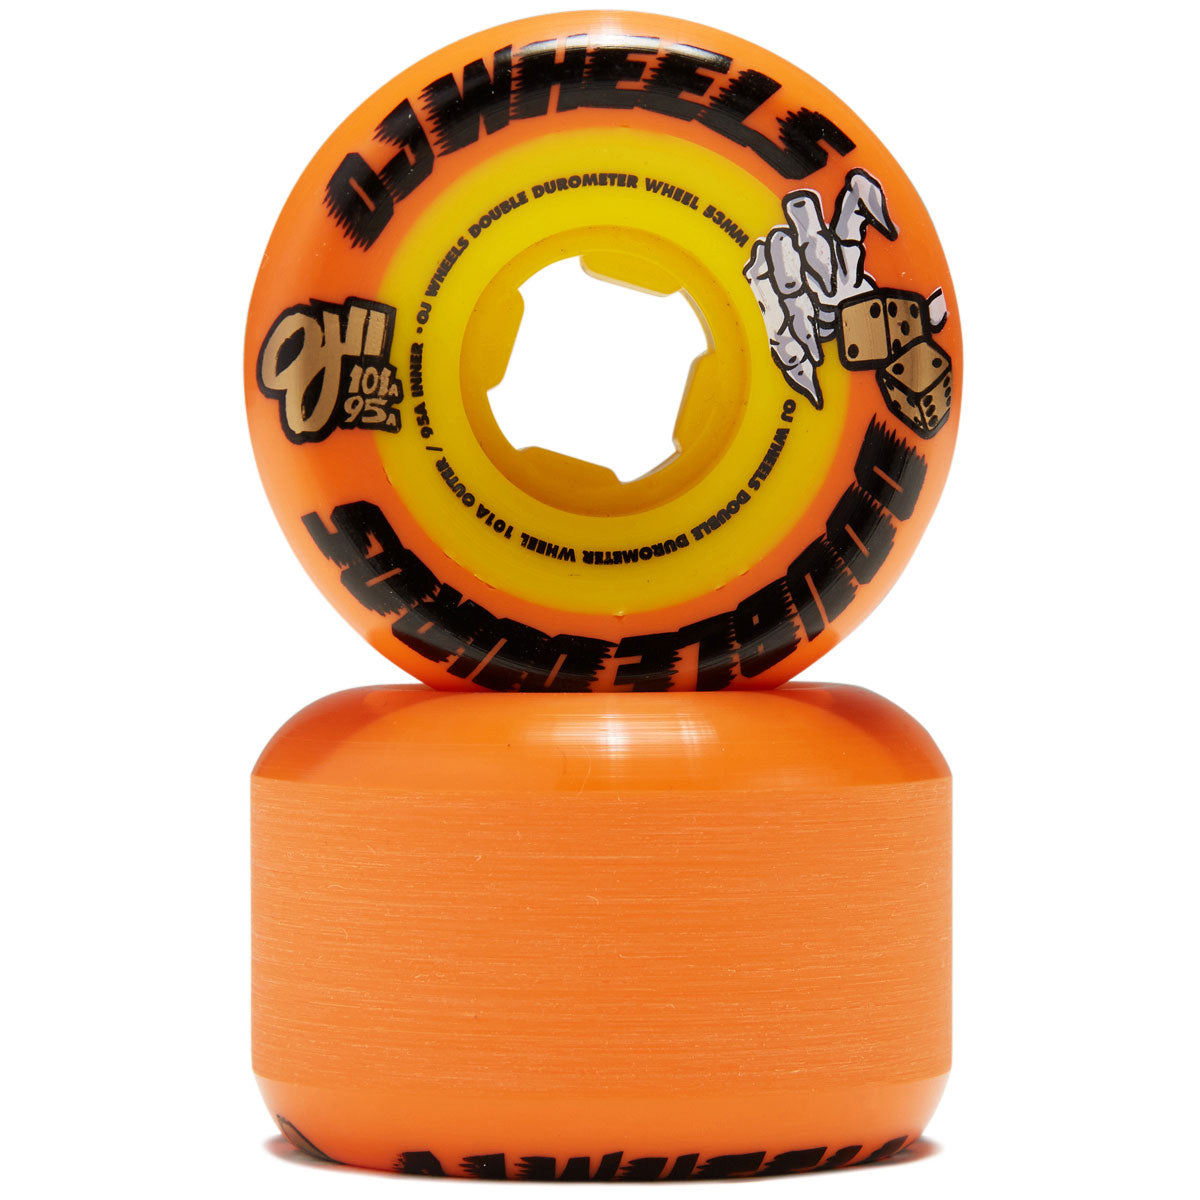 OJ Double Duro 101a/95a Skateboard Wheels - Orange/Yellow - 53mm image 2